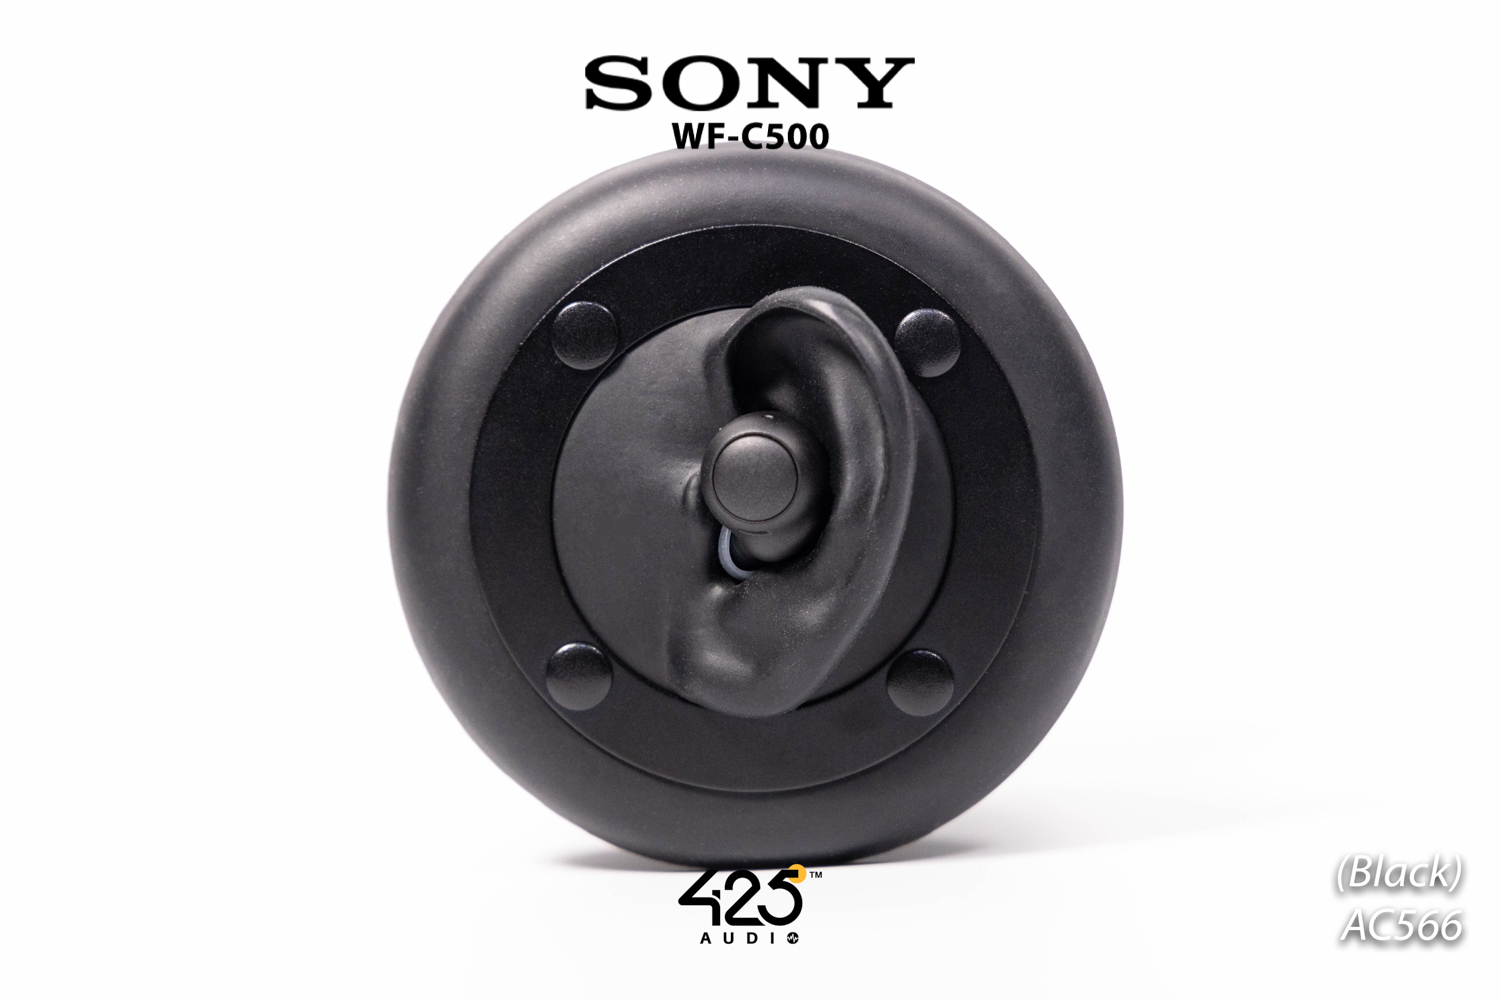 Sony WF-C500,หูฟัง sony,หูฟังไร้สาย Sony WF-C500,Sony WF-C500 True Wireless,หูฟังไร้สาย,หูฟังบลูทูธ,fast pair,swift pair